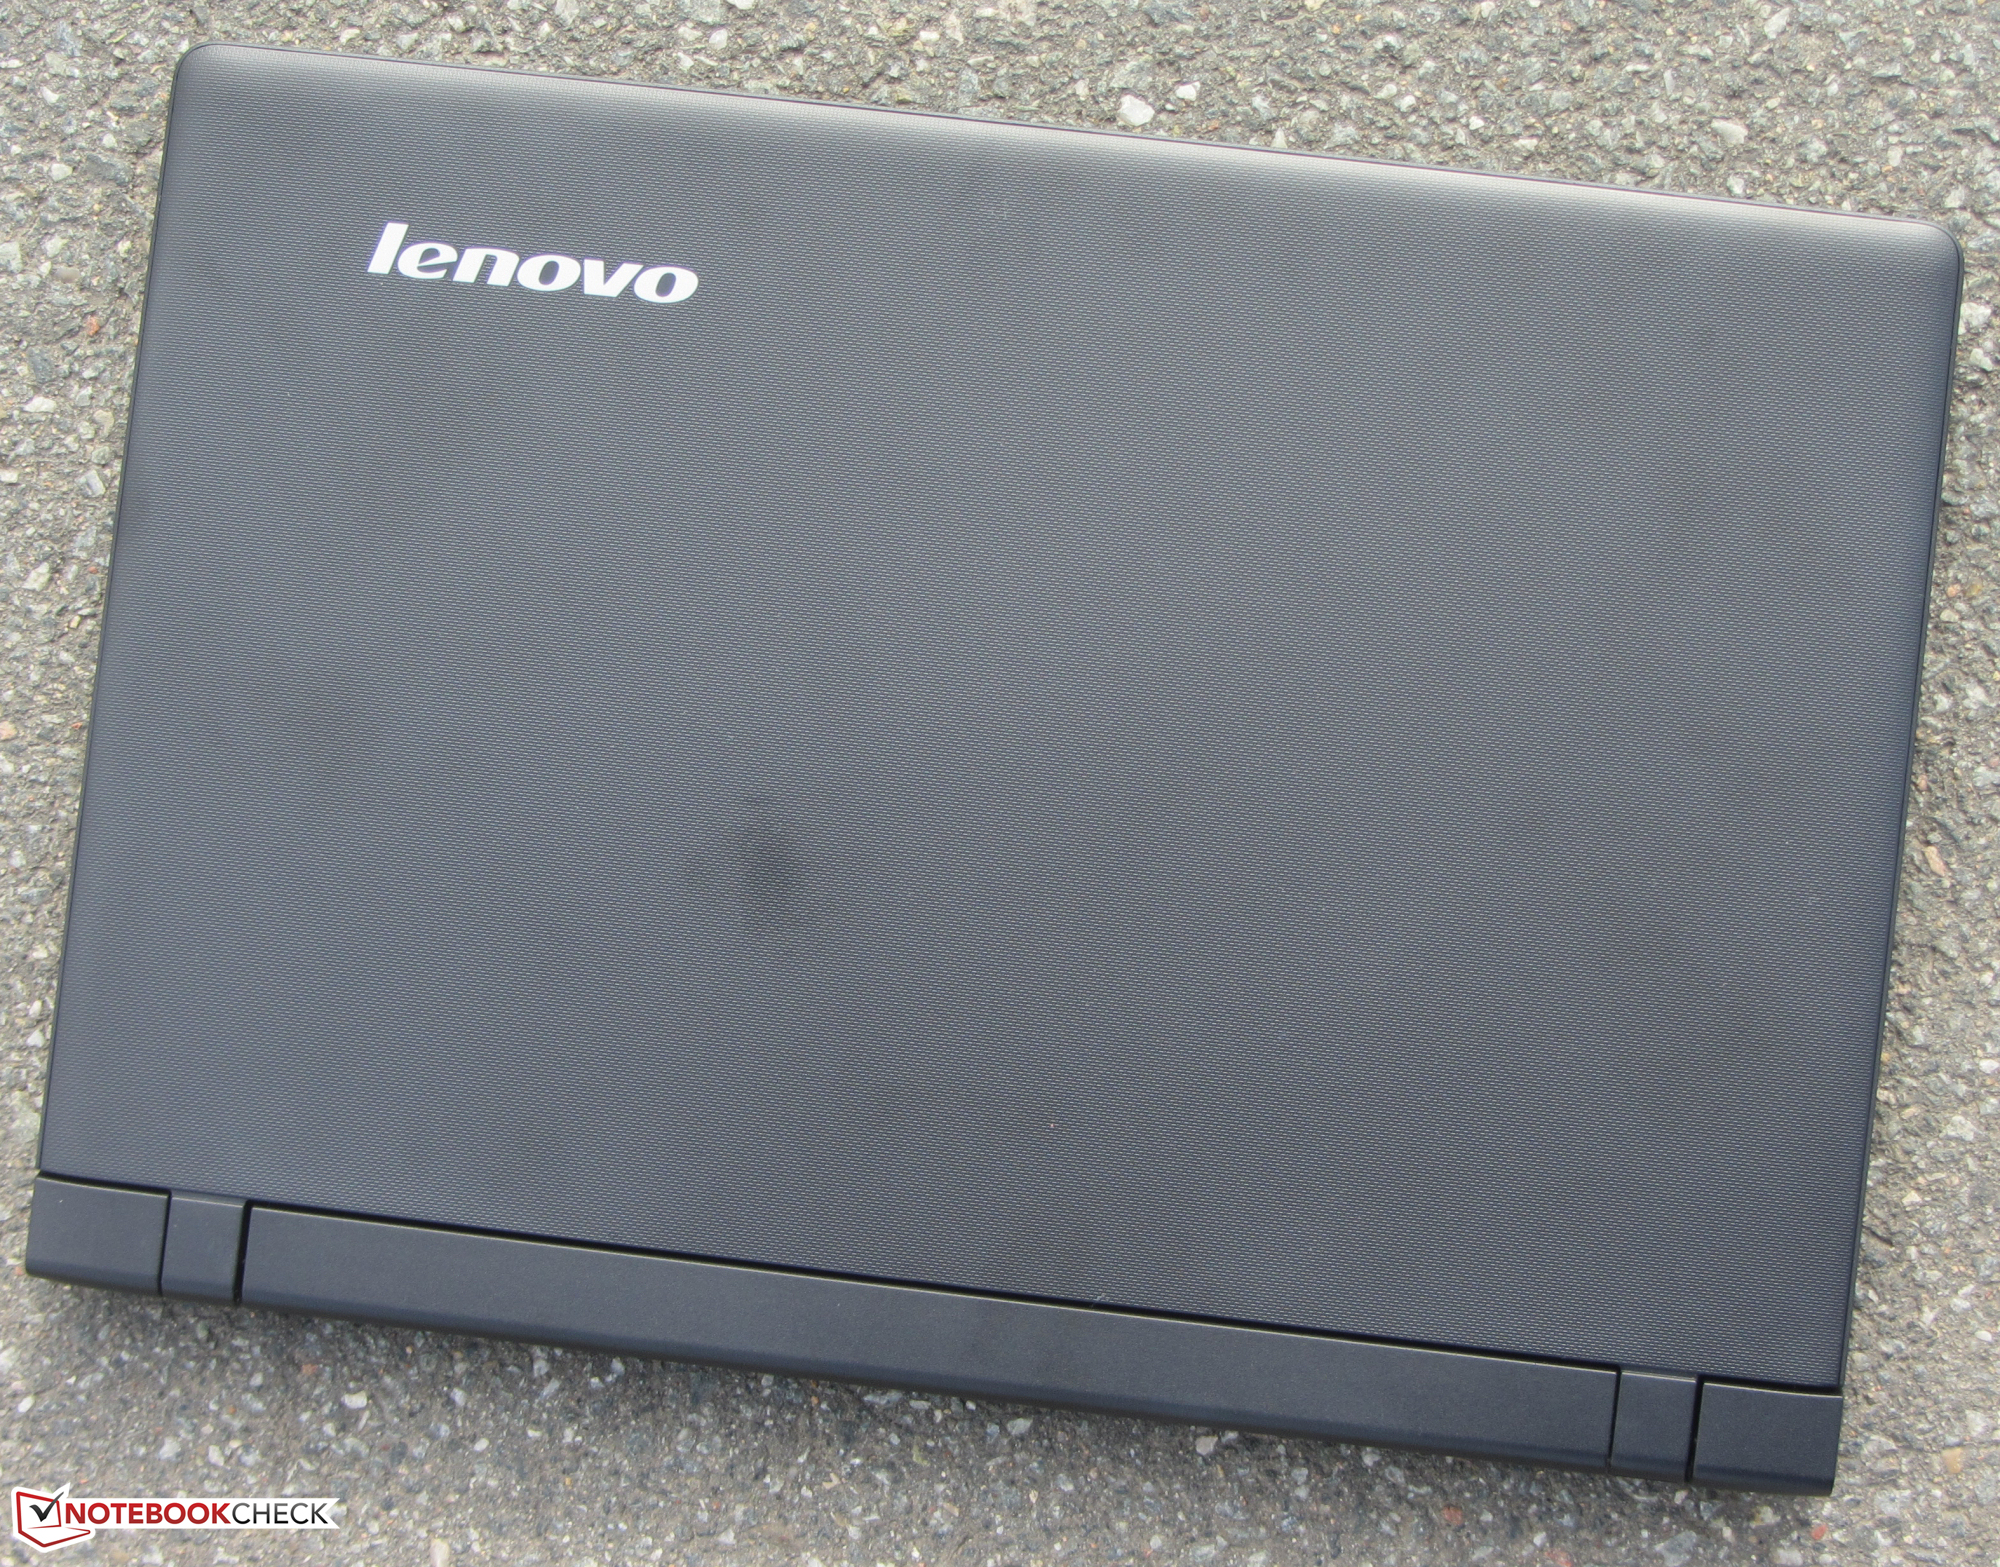 Lenovo Ideapad 100 15 Notebook Review Notebookcheck Net Reviews